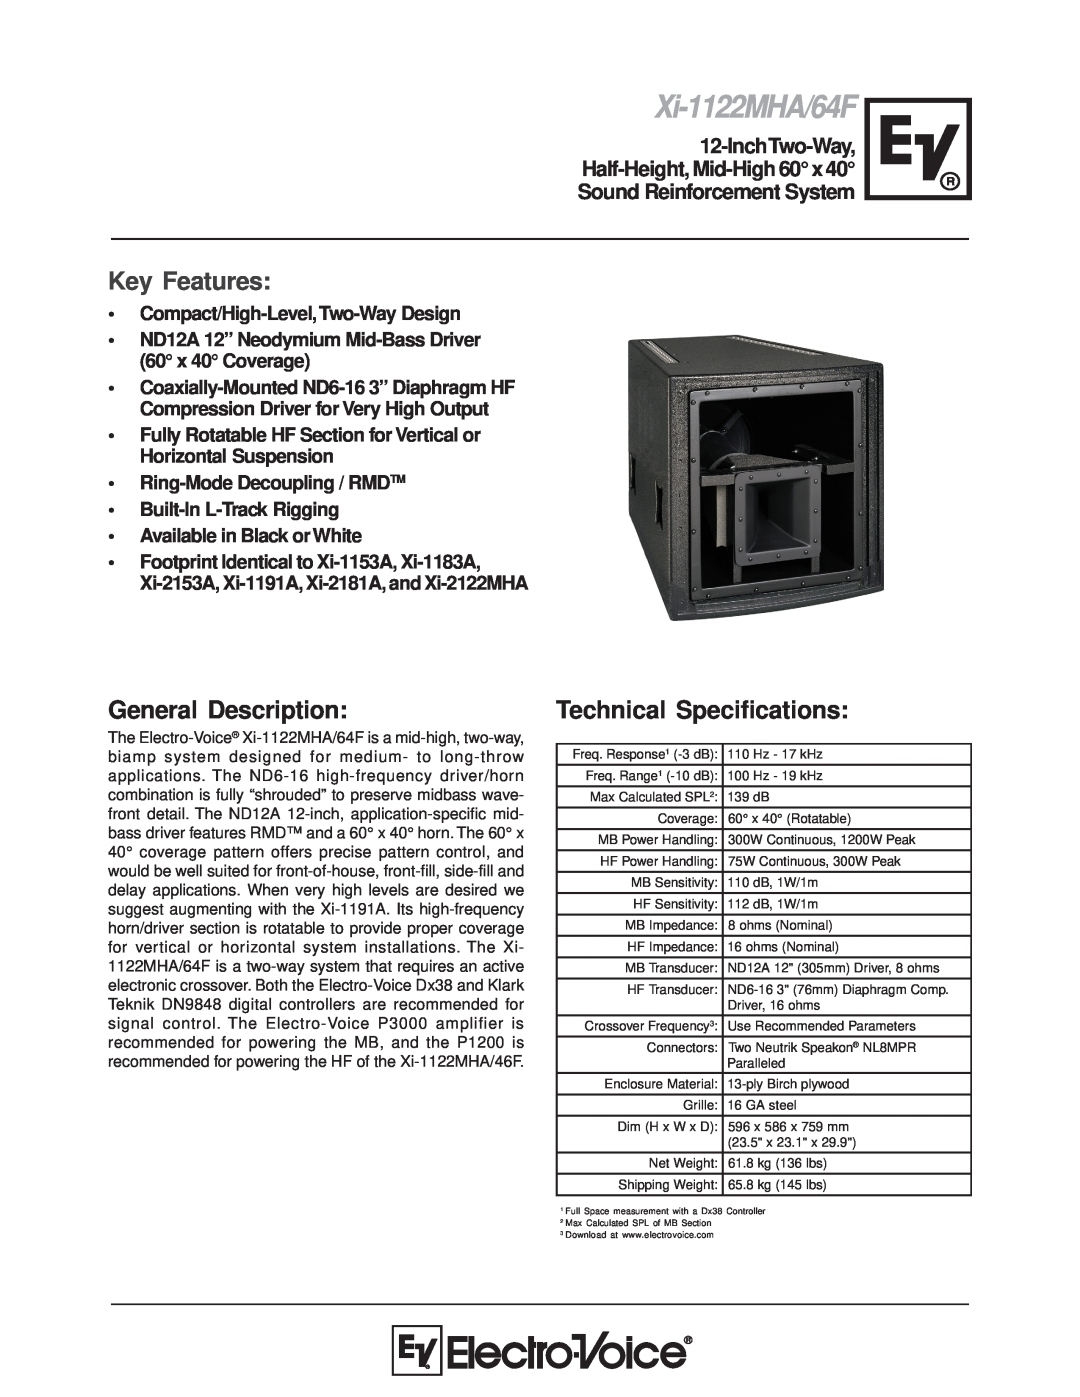 Electro-Voice XI-1122MHA/64F technical specifications Xi-1122MHA/64F, General Description, Technical Specifications 